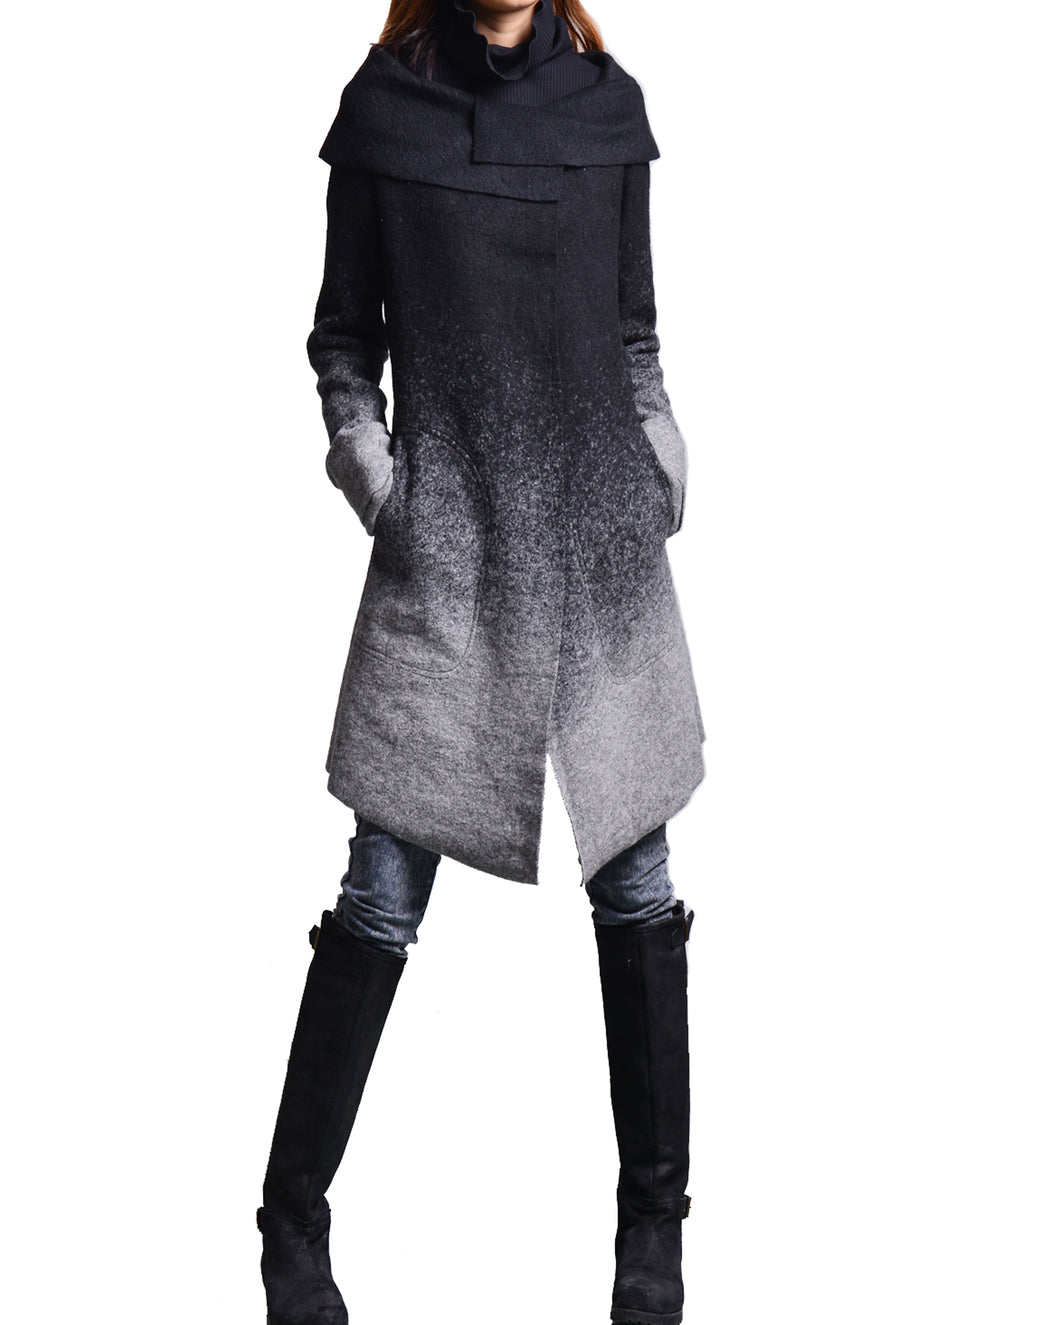 Womens wool coat and Cotton Top Set, Gradient Color Coat, Black Long Sleeve T-shirt, Winter Jacket, Wool Overcoat, Black and Gray Coat, Cotton Bottoming Top(Y1591) - lijingshop